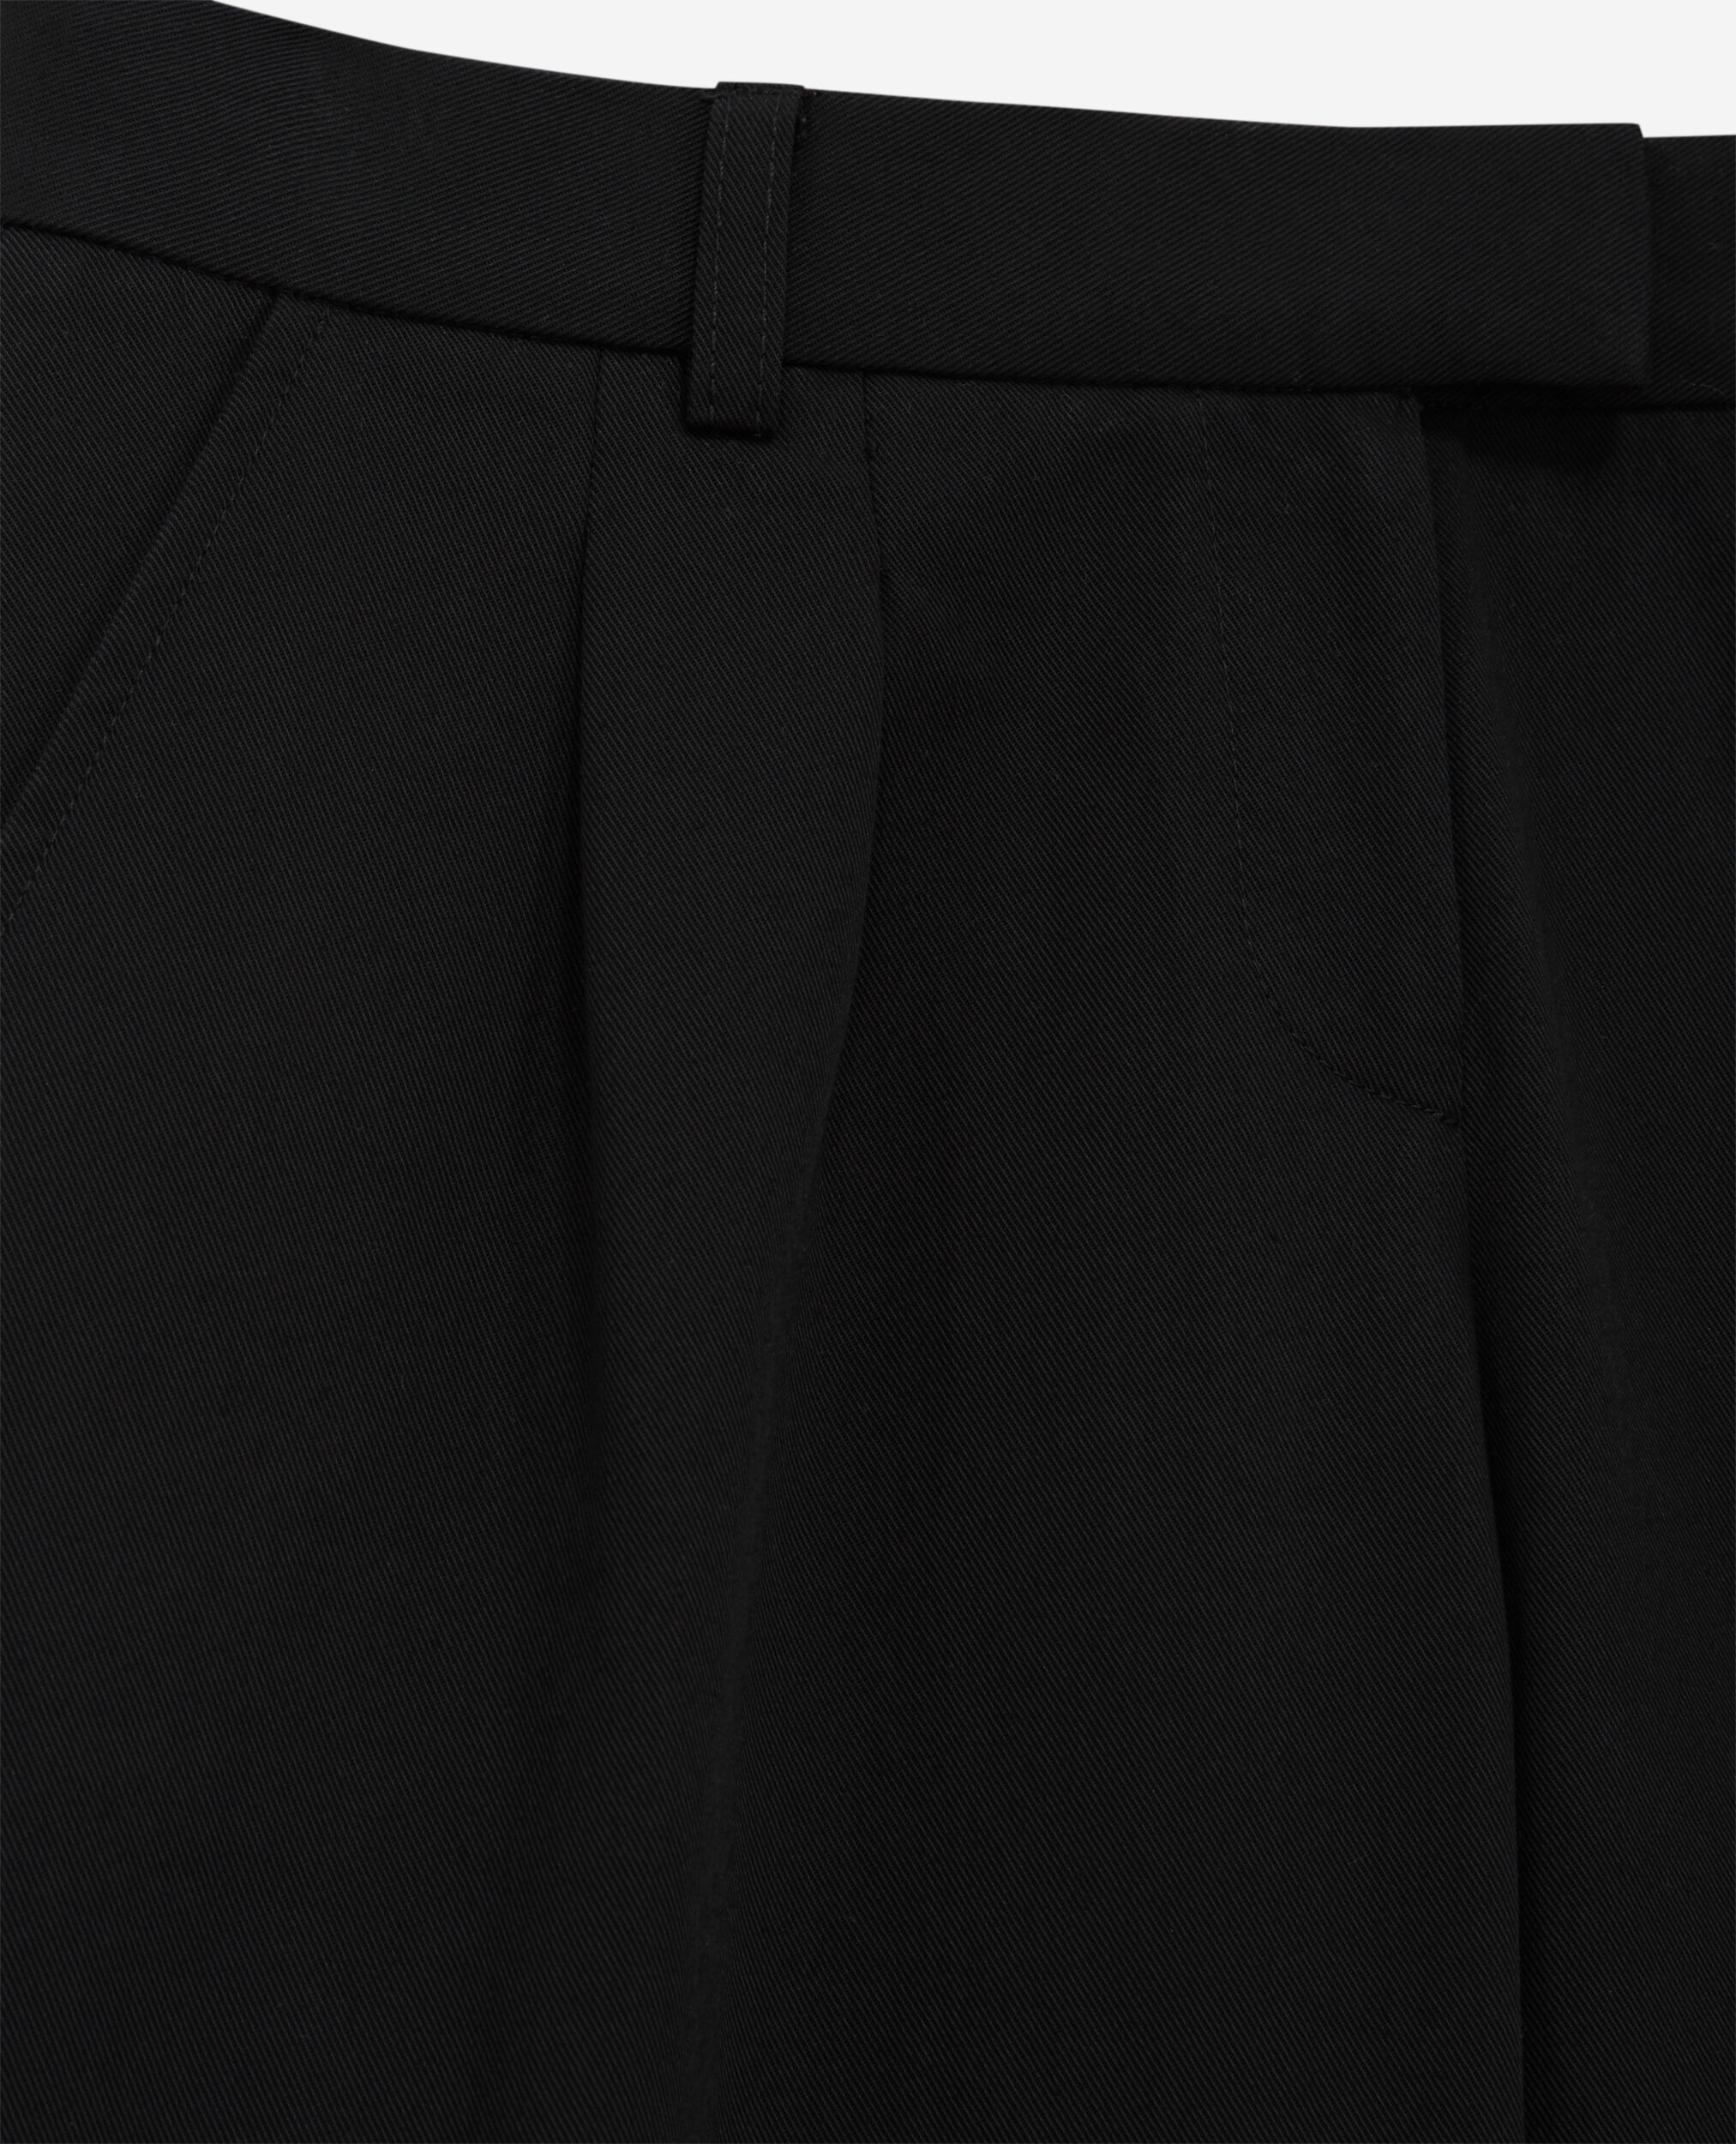 Pantalon large noir, BLACK, hi-res image number null